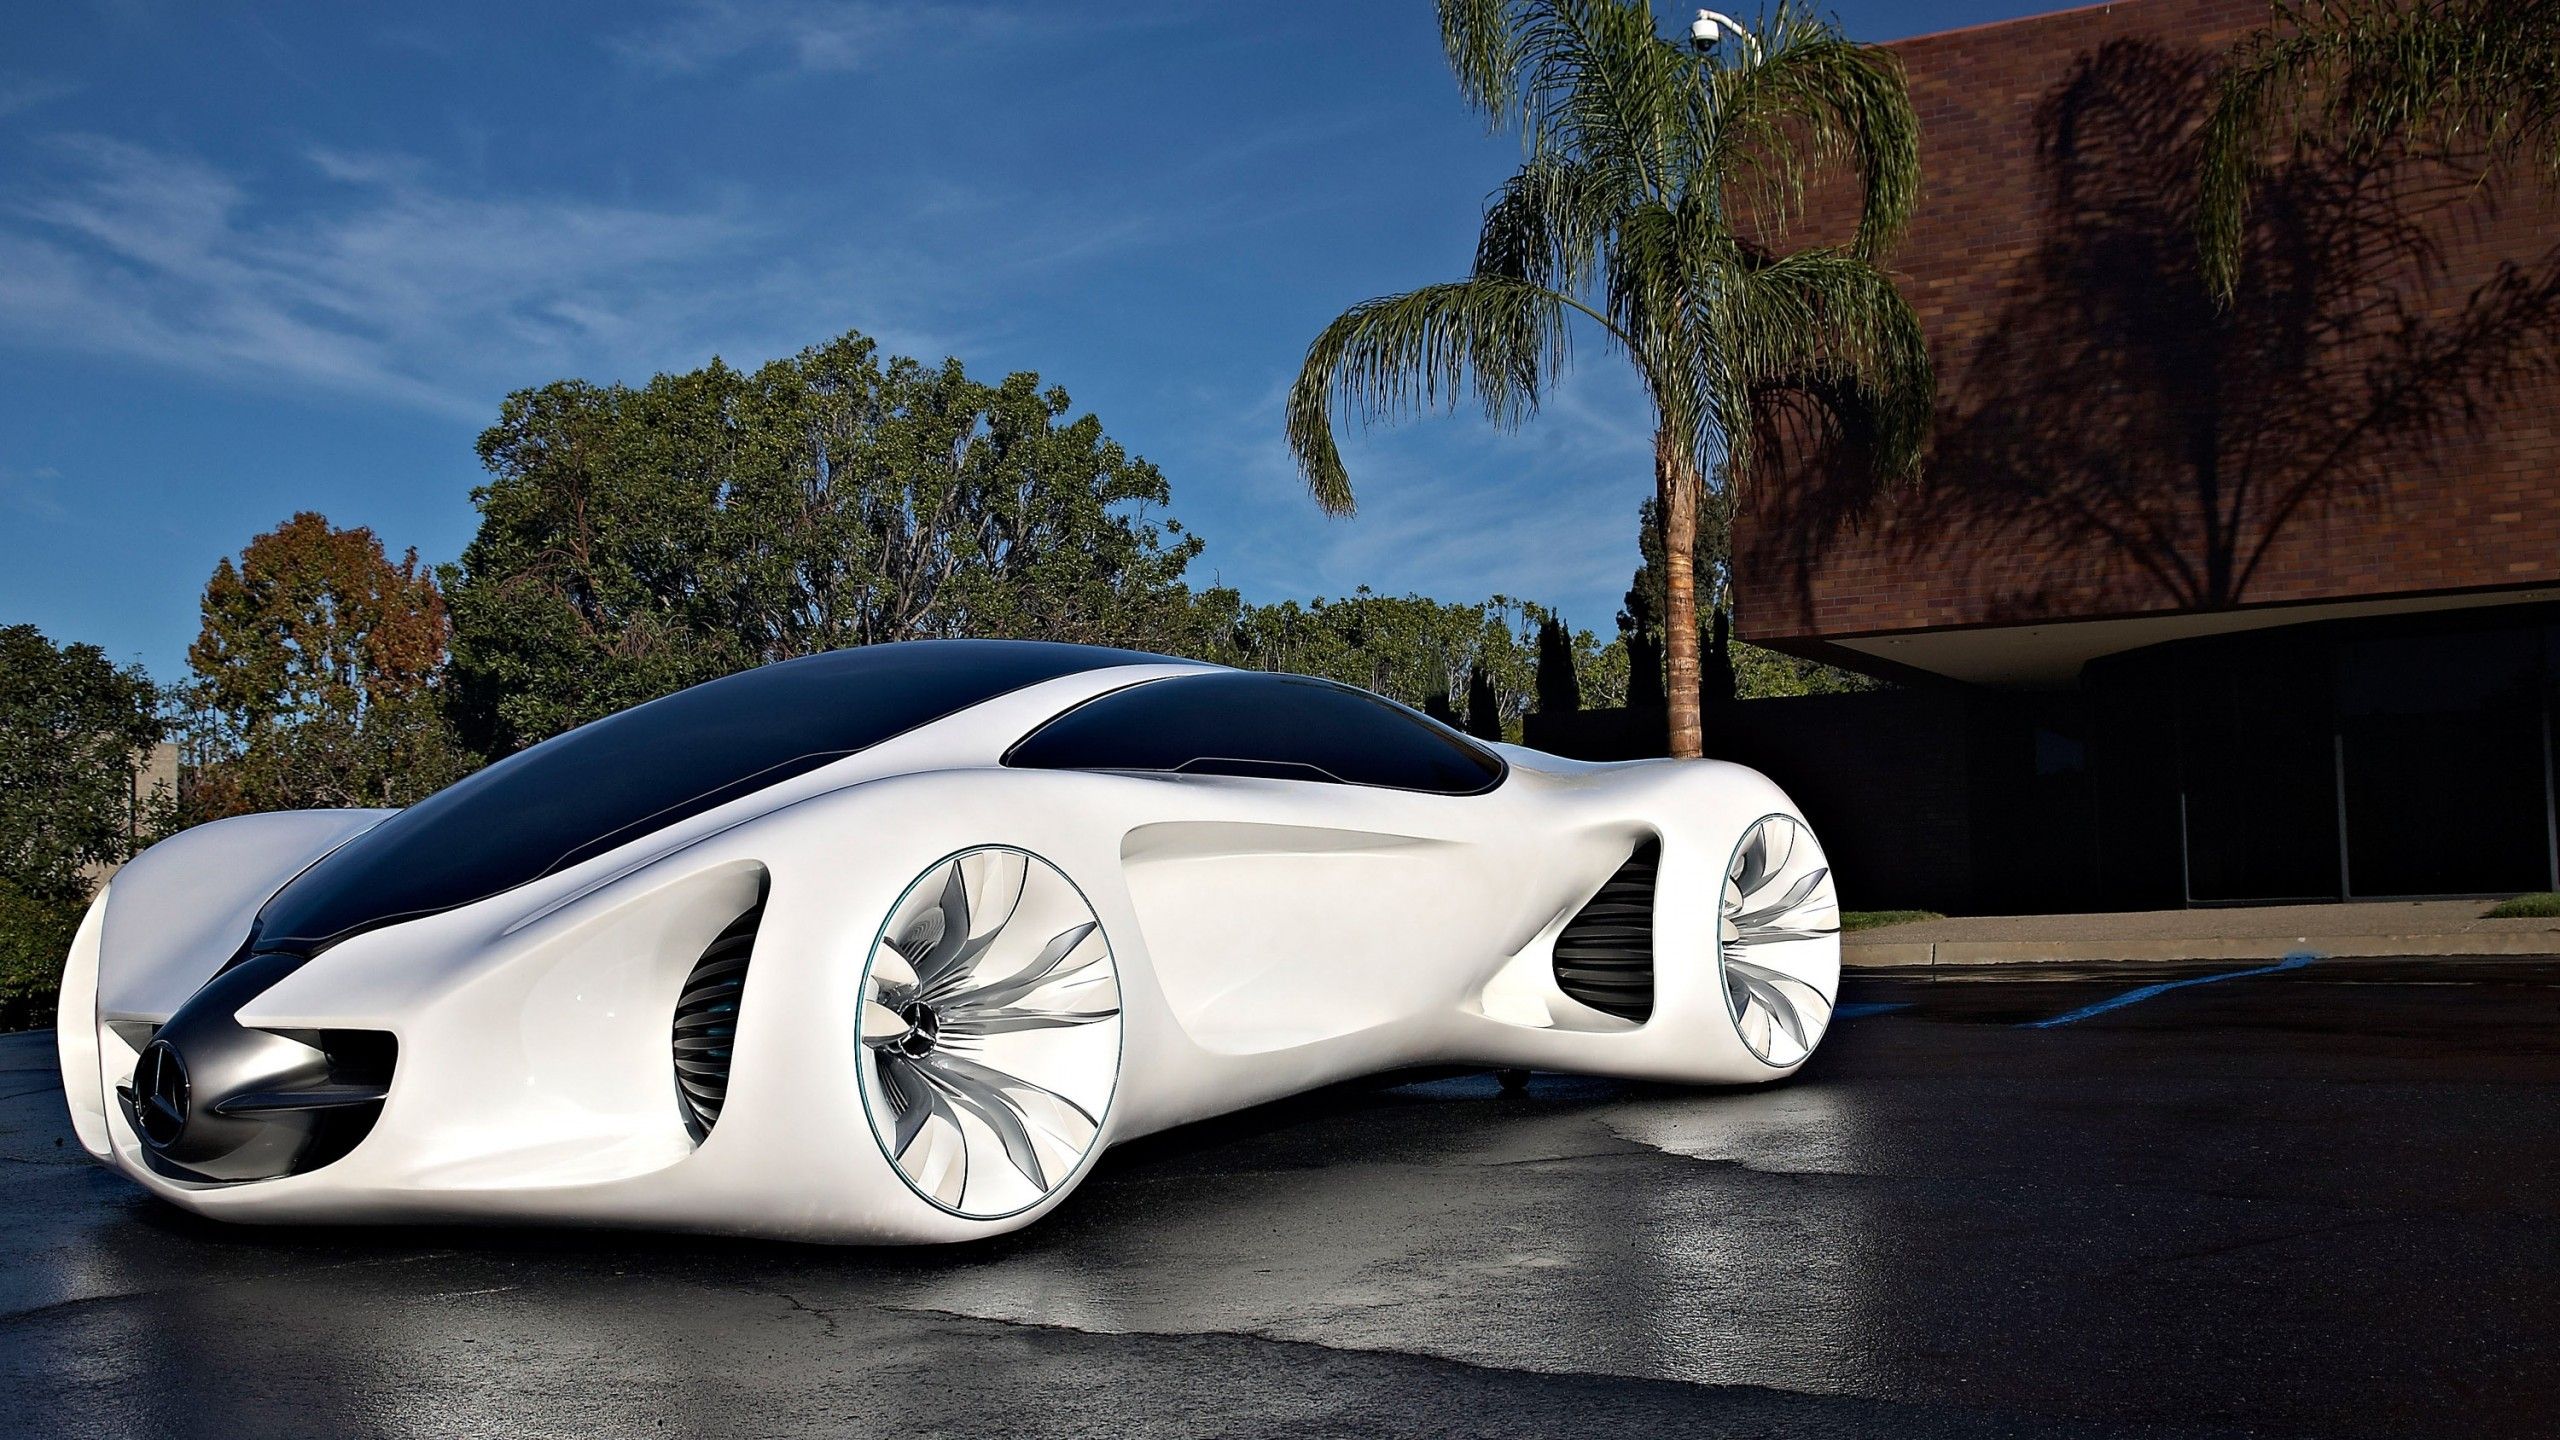 Download 2560x1440 Mercedes Benz Biome, Concept Design, Futuristic, Cars Wallpaper for iMac 27 inch